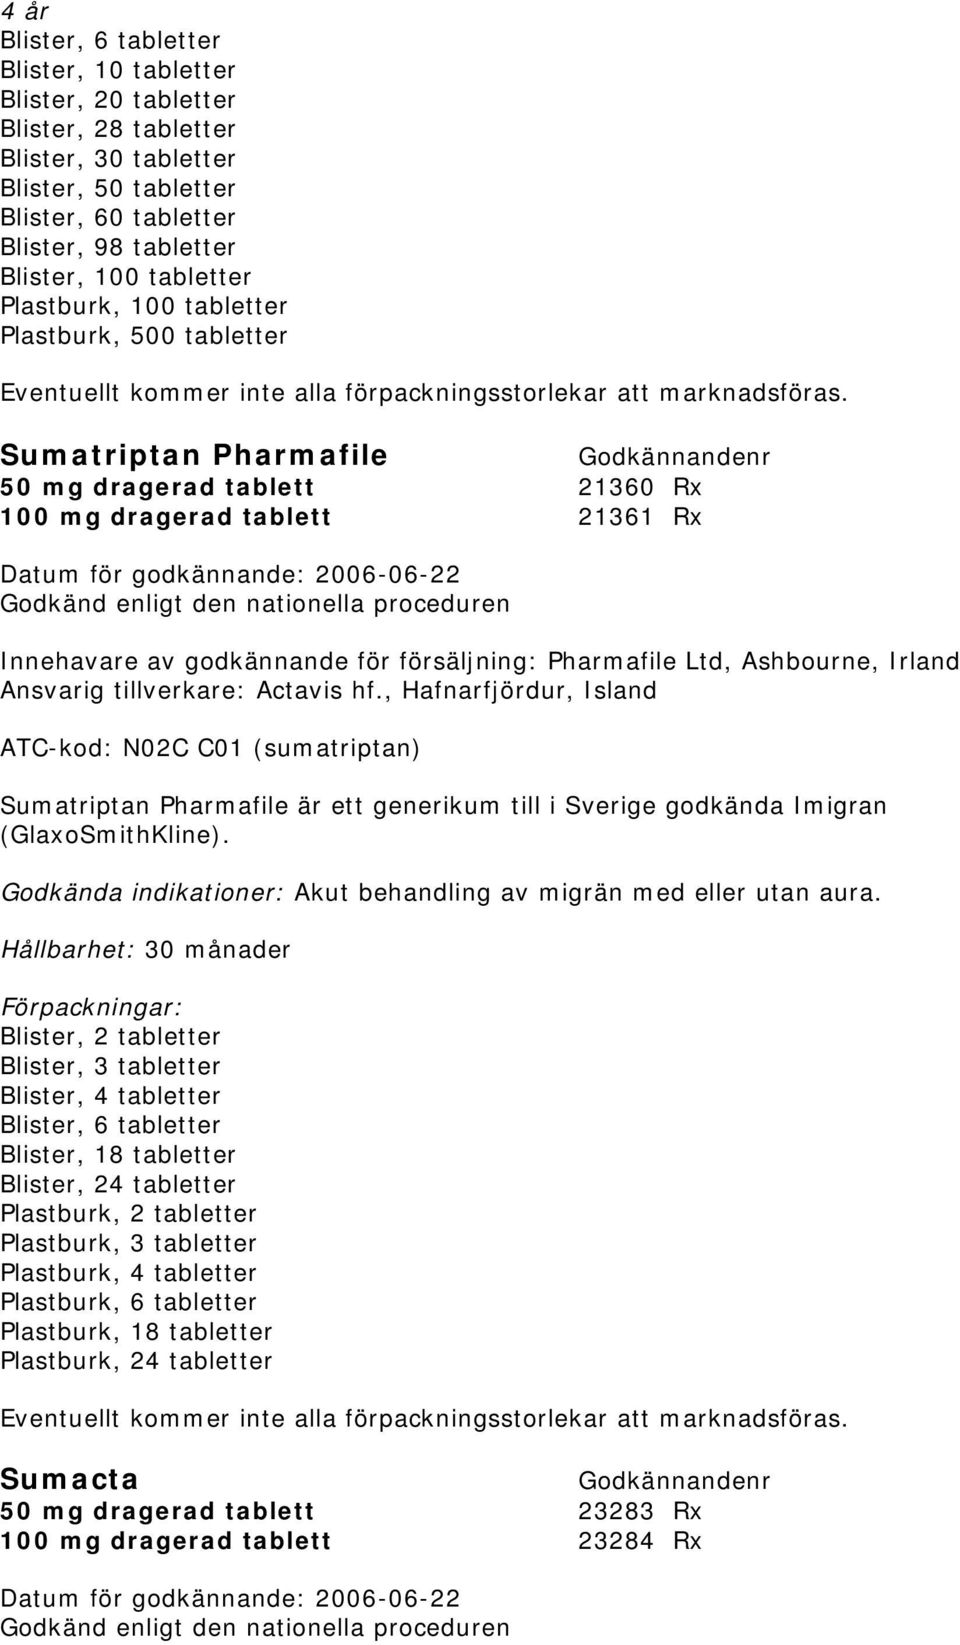 Sumatriptan Pharmafile 50 mg dragerad tablett 21360 Rx 100 mg dragerad tablett 21361 Rx Innehavare av godkännande för försäljning: Pharmafile Ltd, Ashbourne, Irland ATC-kod: N02C C01 (sumatriptan)